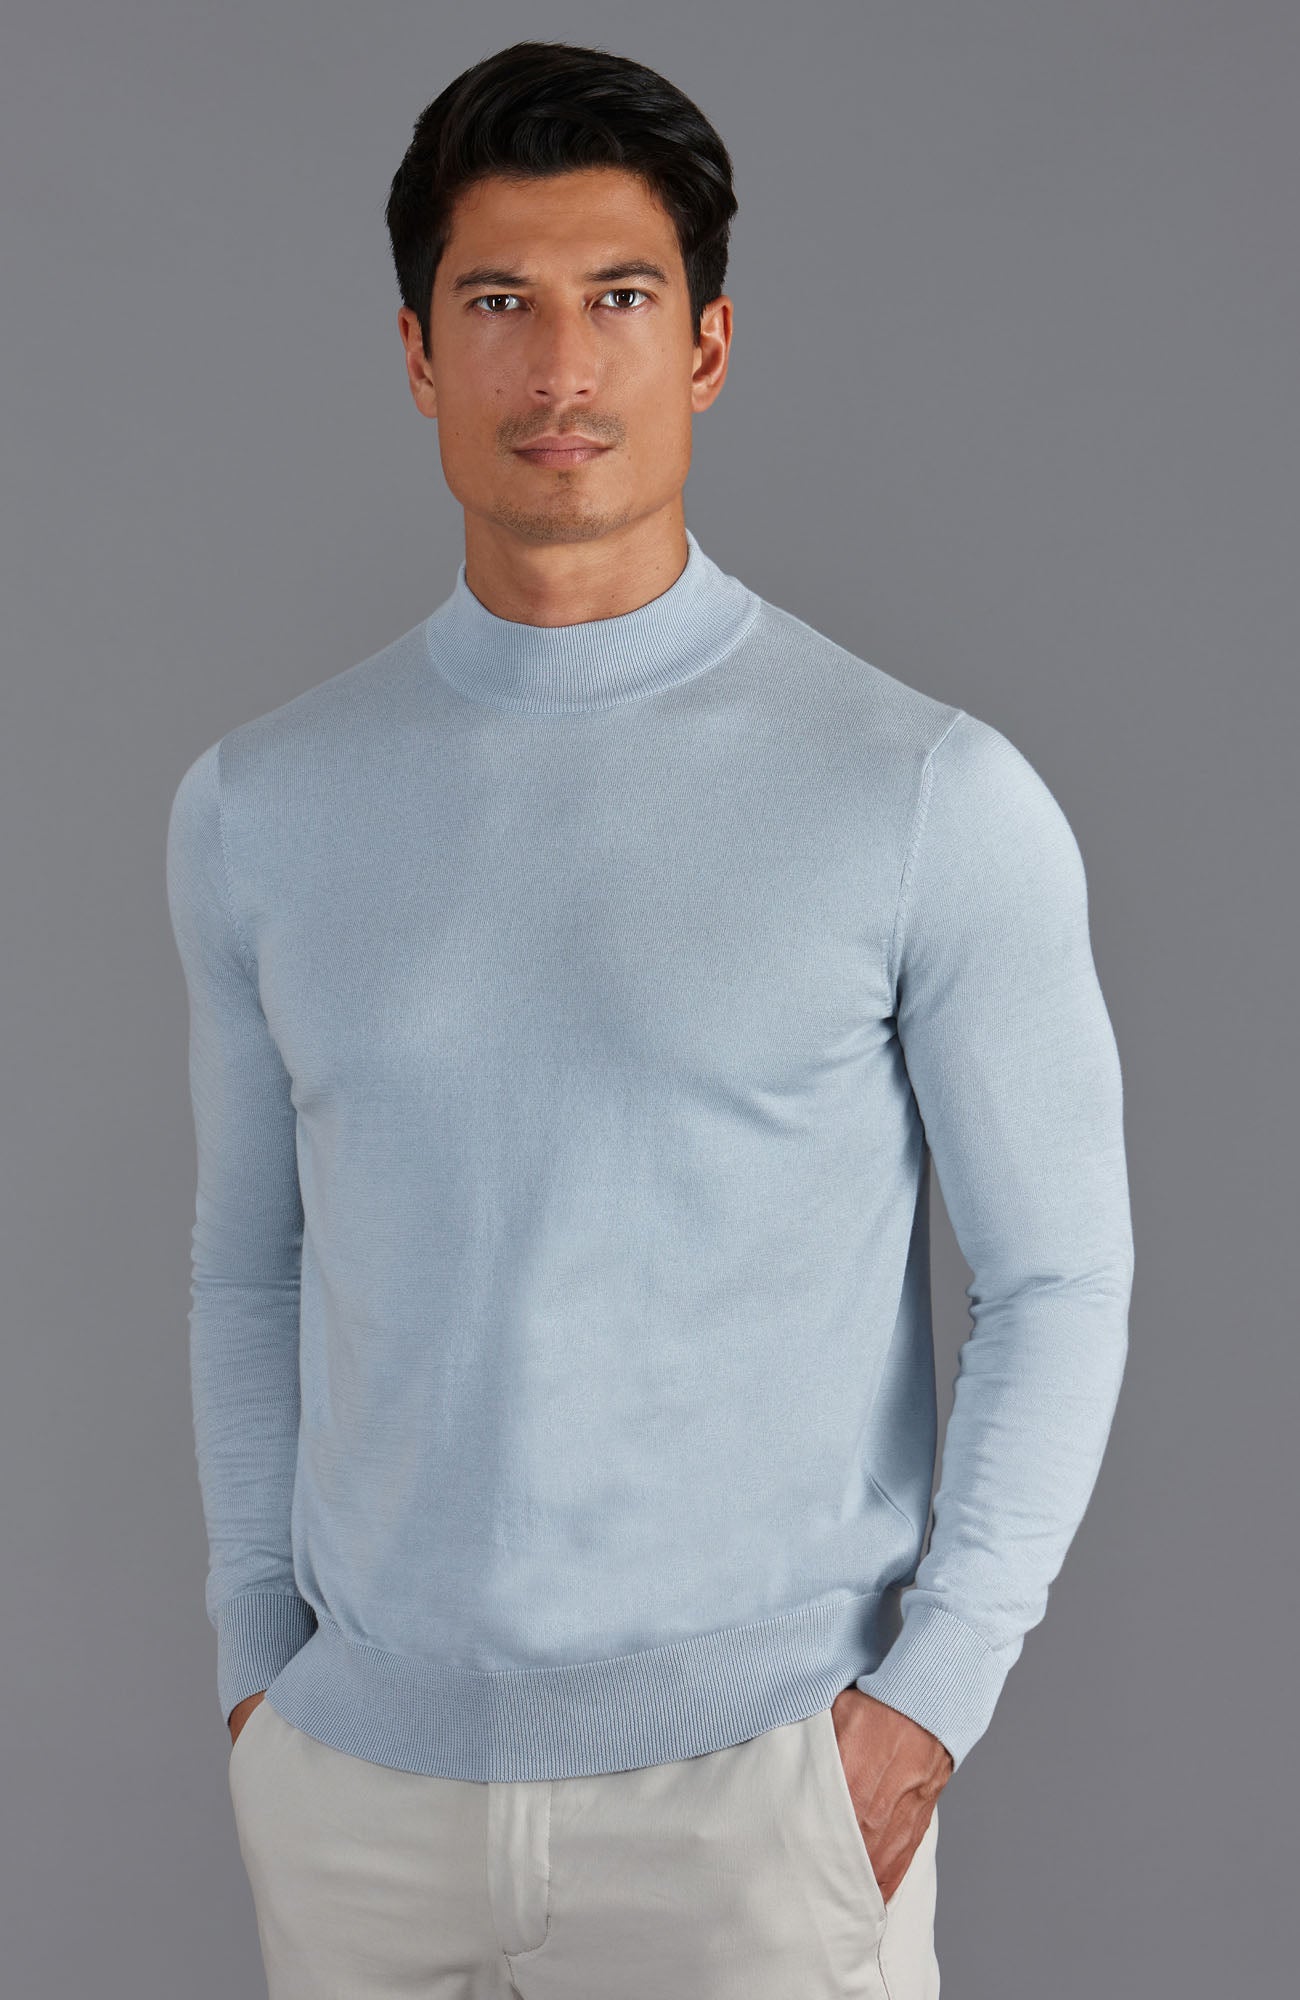 mens blue mock turtle neck sweater